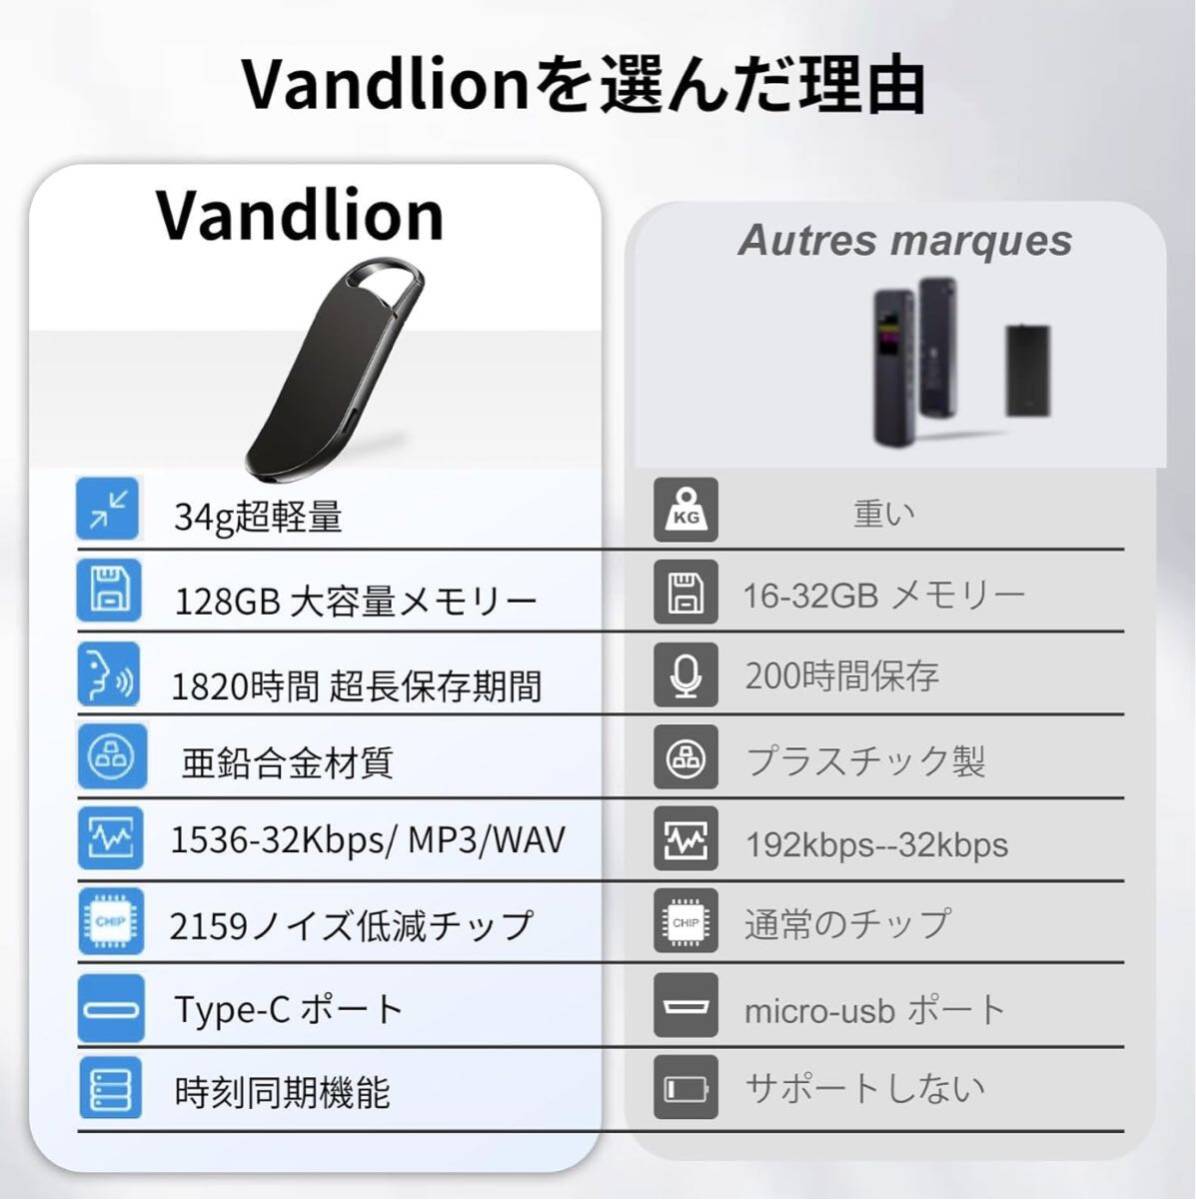 Vandlion 128GB ボイスレコーダー 長時間録音 大容量 ワンボタン録音 ノイズキャンセリング機能 自動保存 Type-Cケーブル 日本語説明書付の画像6